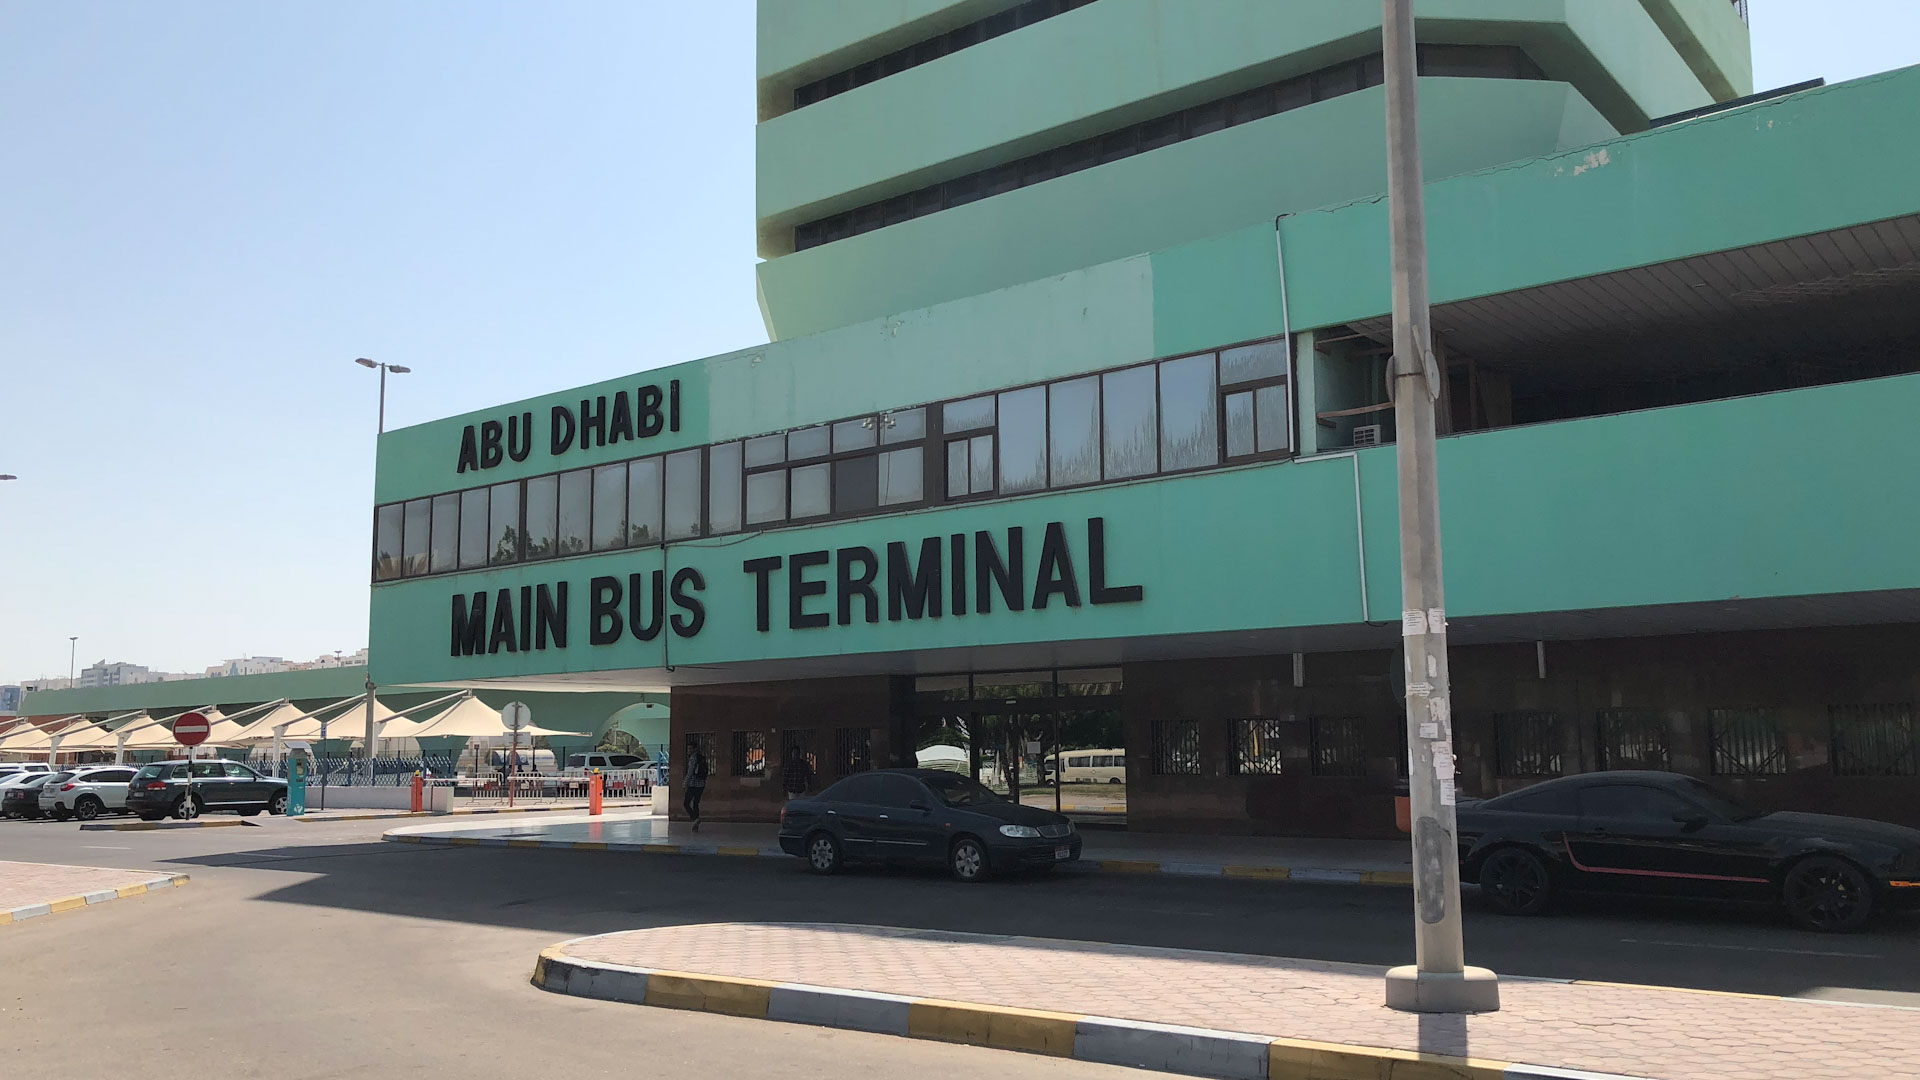 Abu Dhabi Main Bus Terminal